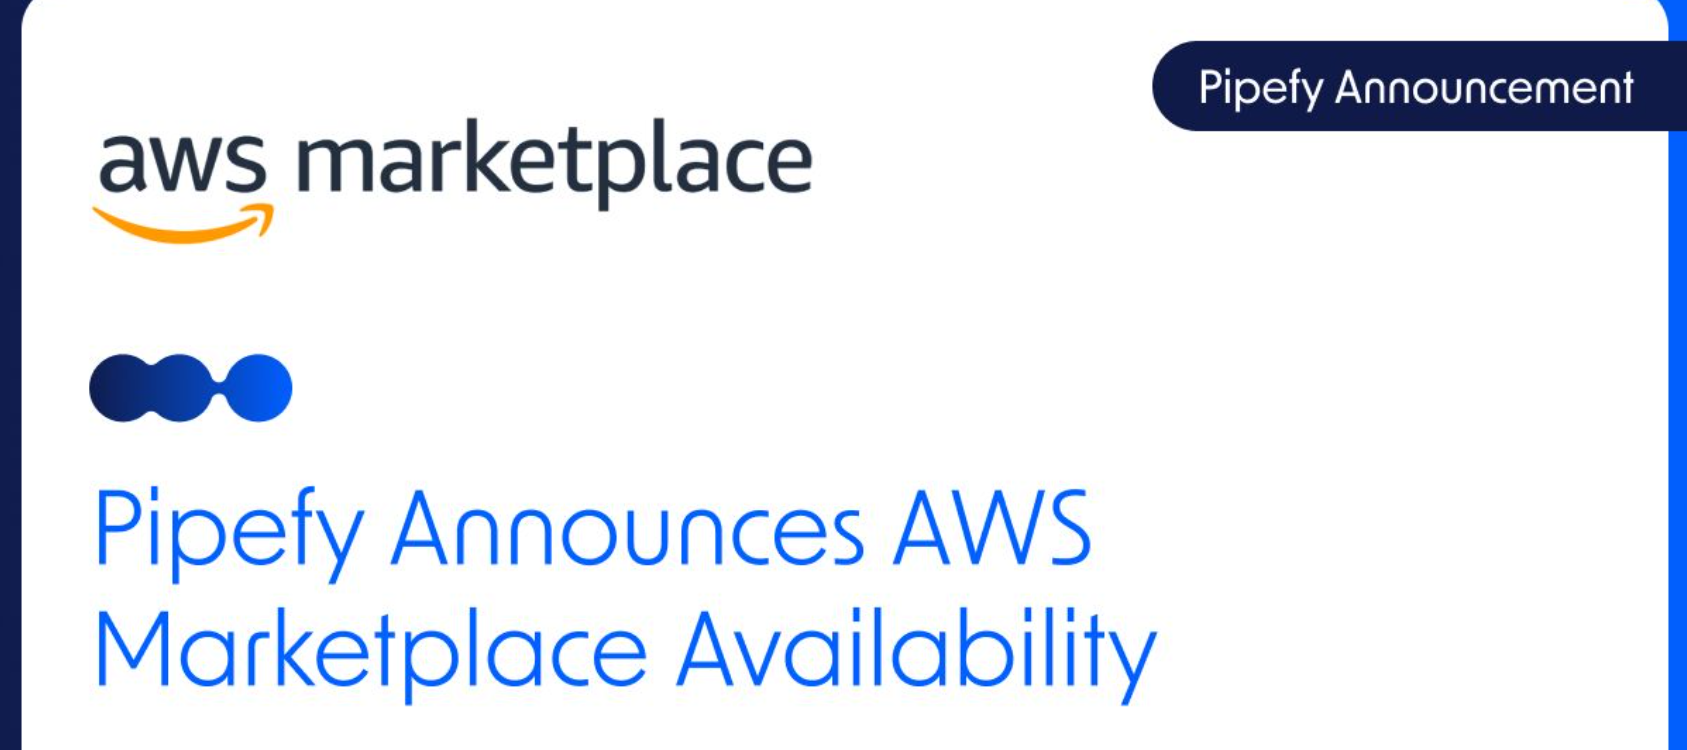 Pipefy Announces AWS Marketplace Availability